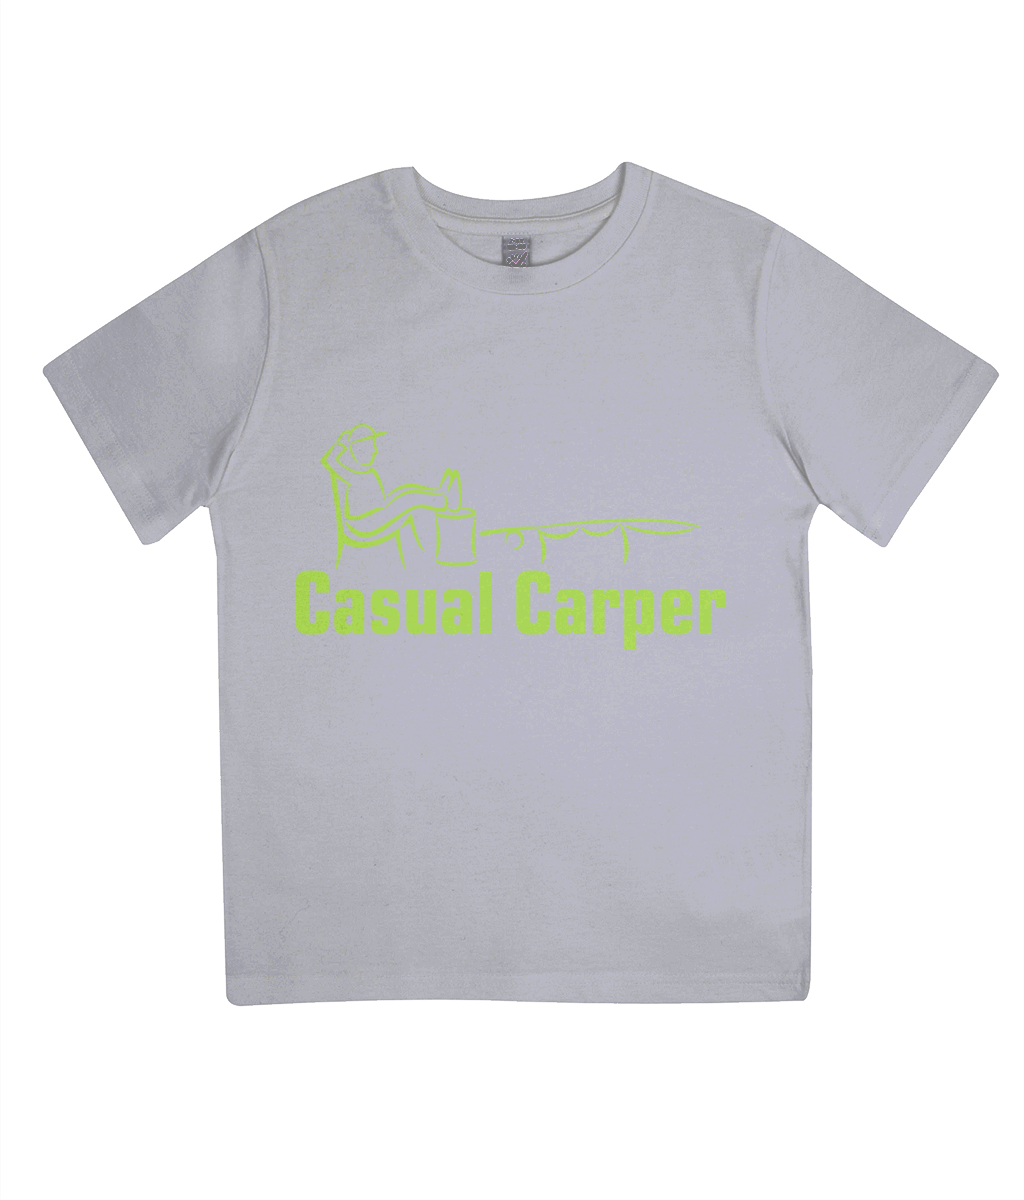 Kids Casual Carper Logo T-Shirt